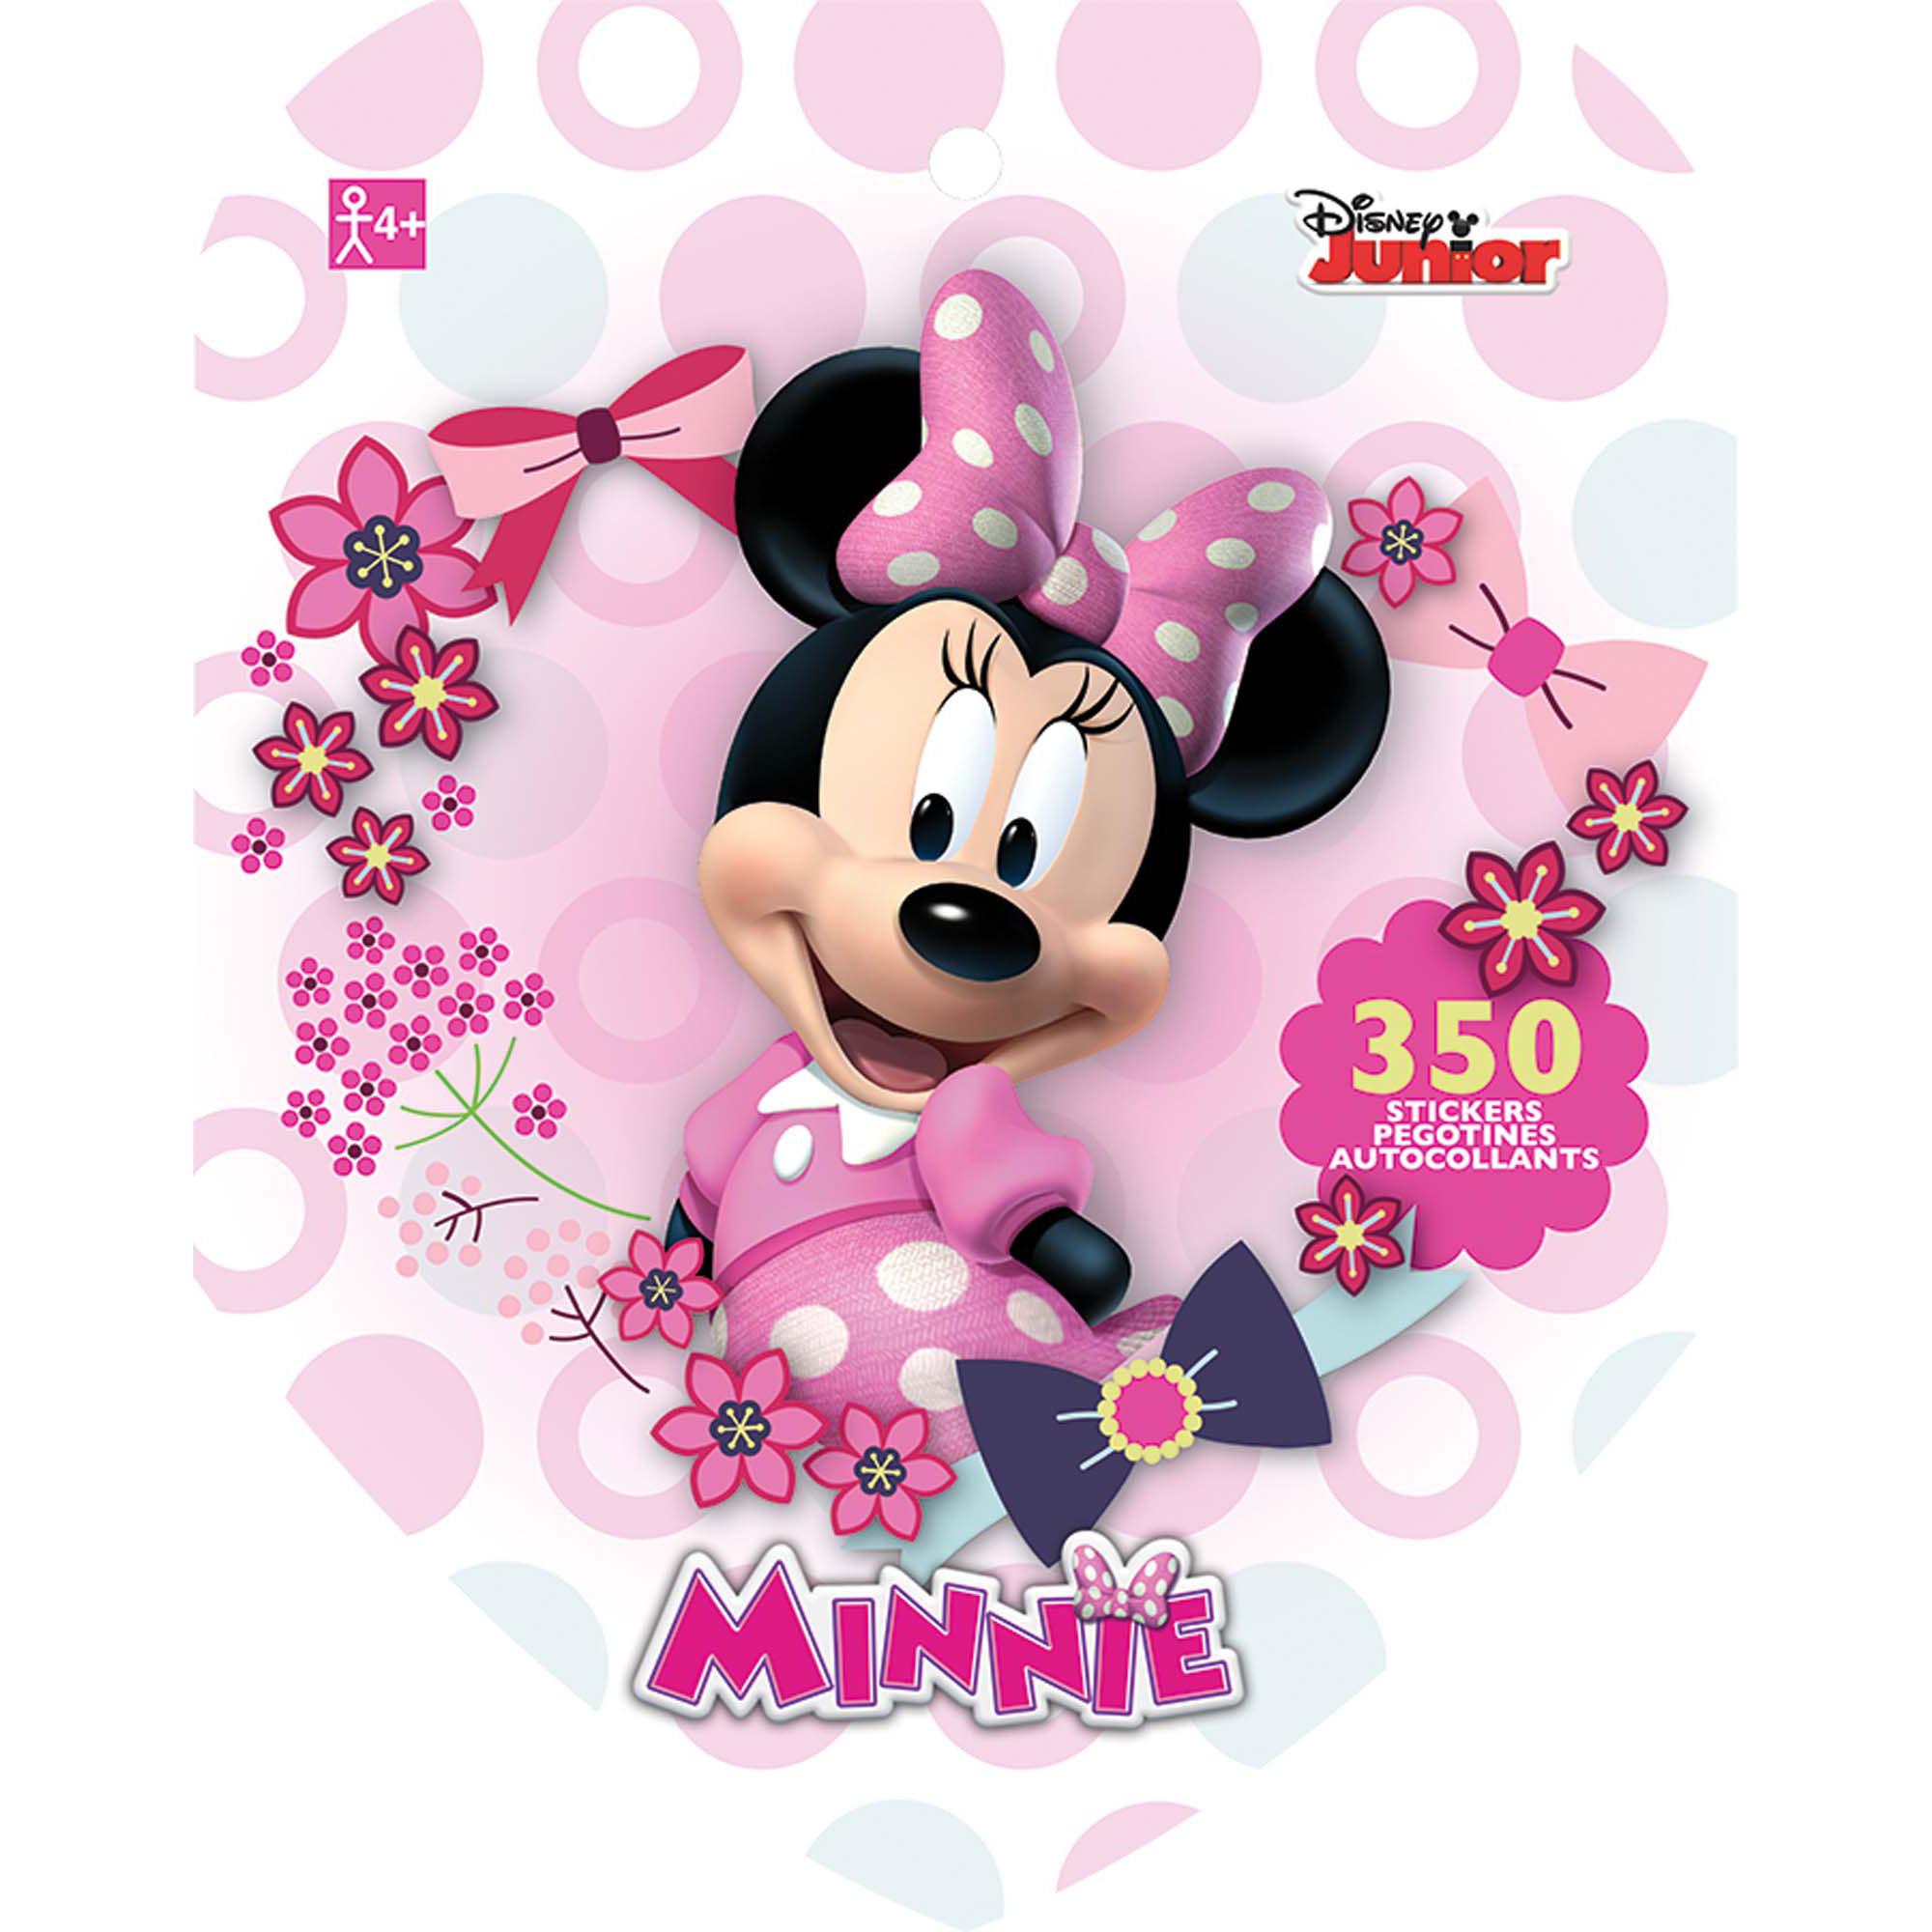 Disney Minnie Mouse Sticker Book Party Favors - Party Centre - Party Centre